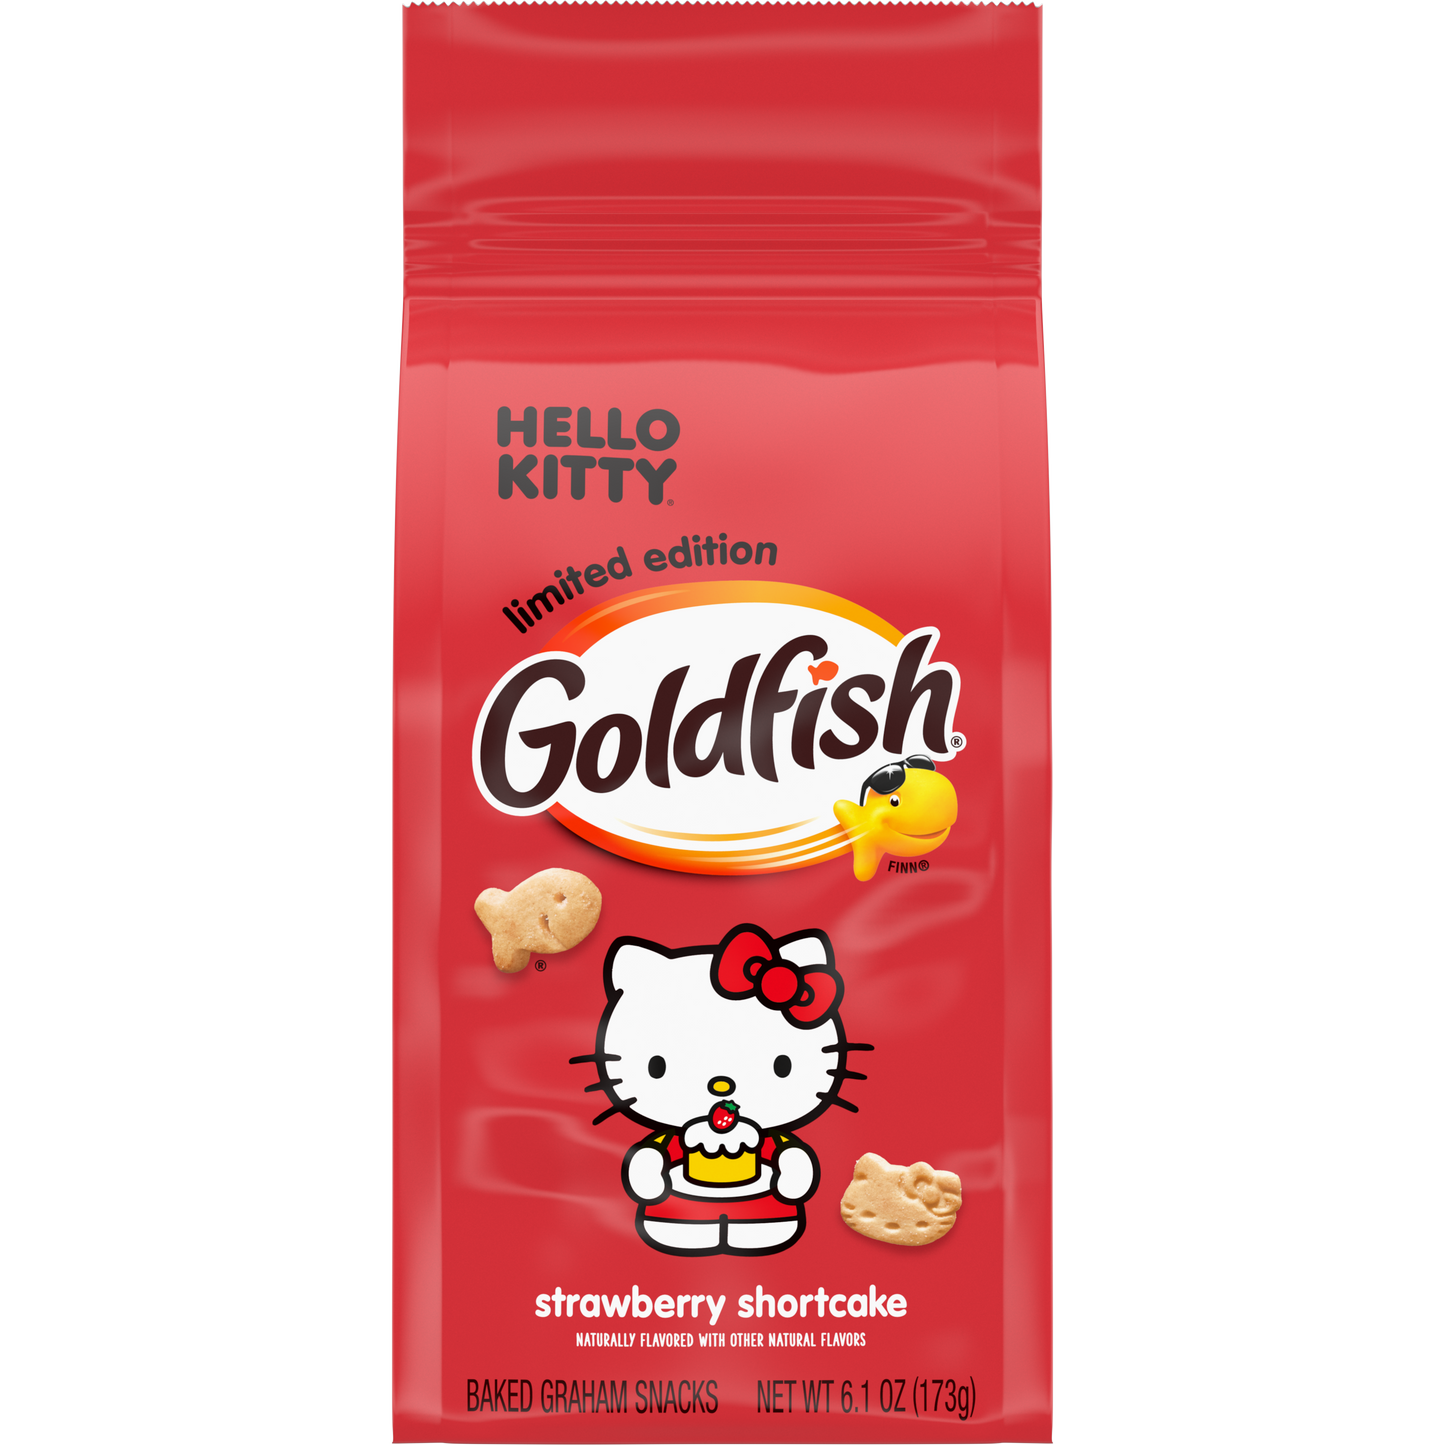 Limited Edition Goldfish® Hello Kitty® Strawberry Shortcake Flavored Grahams